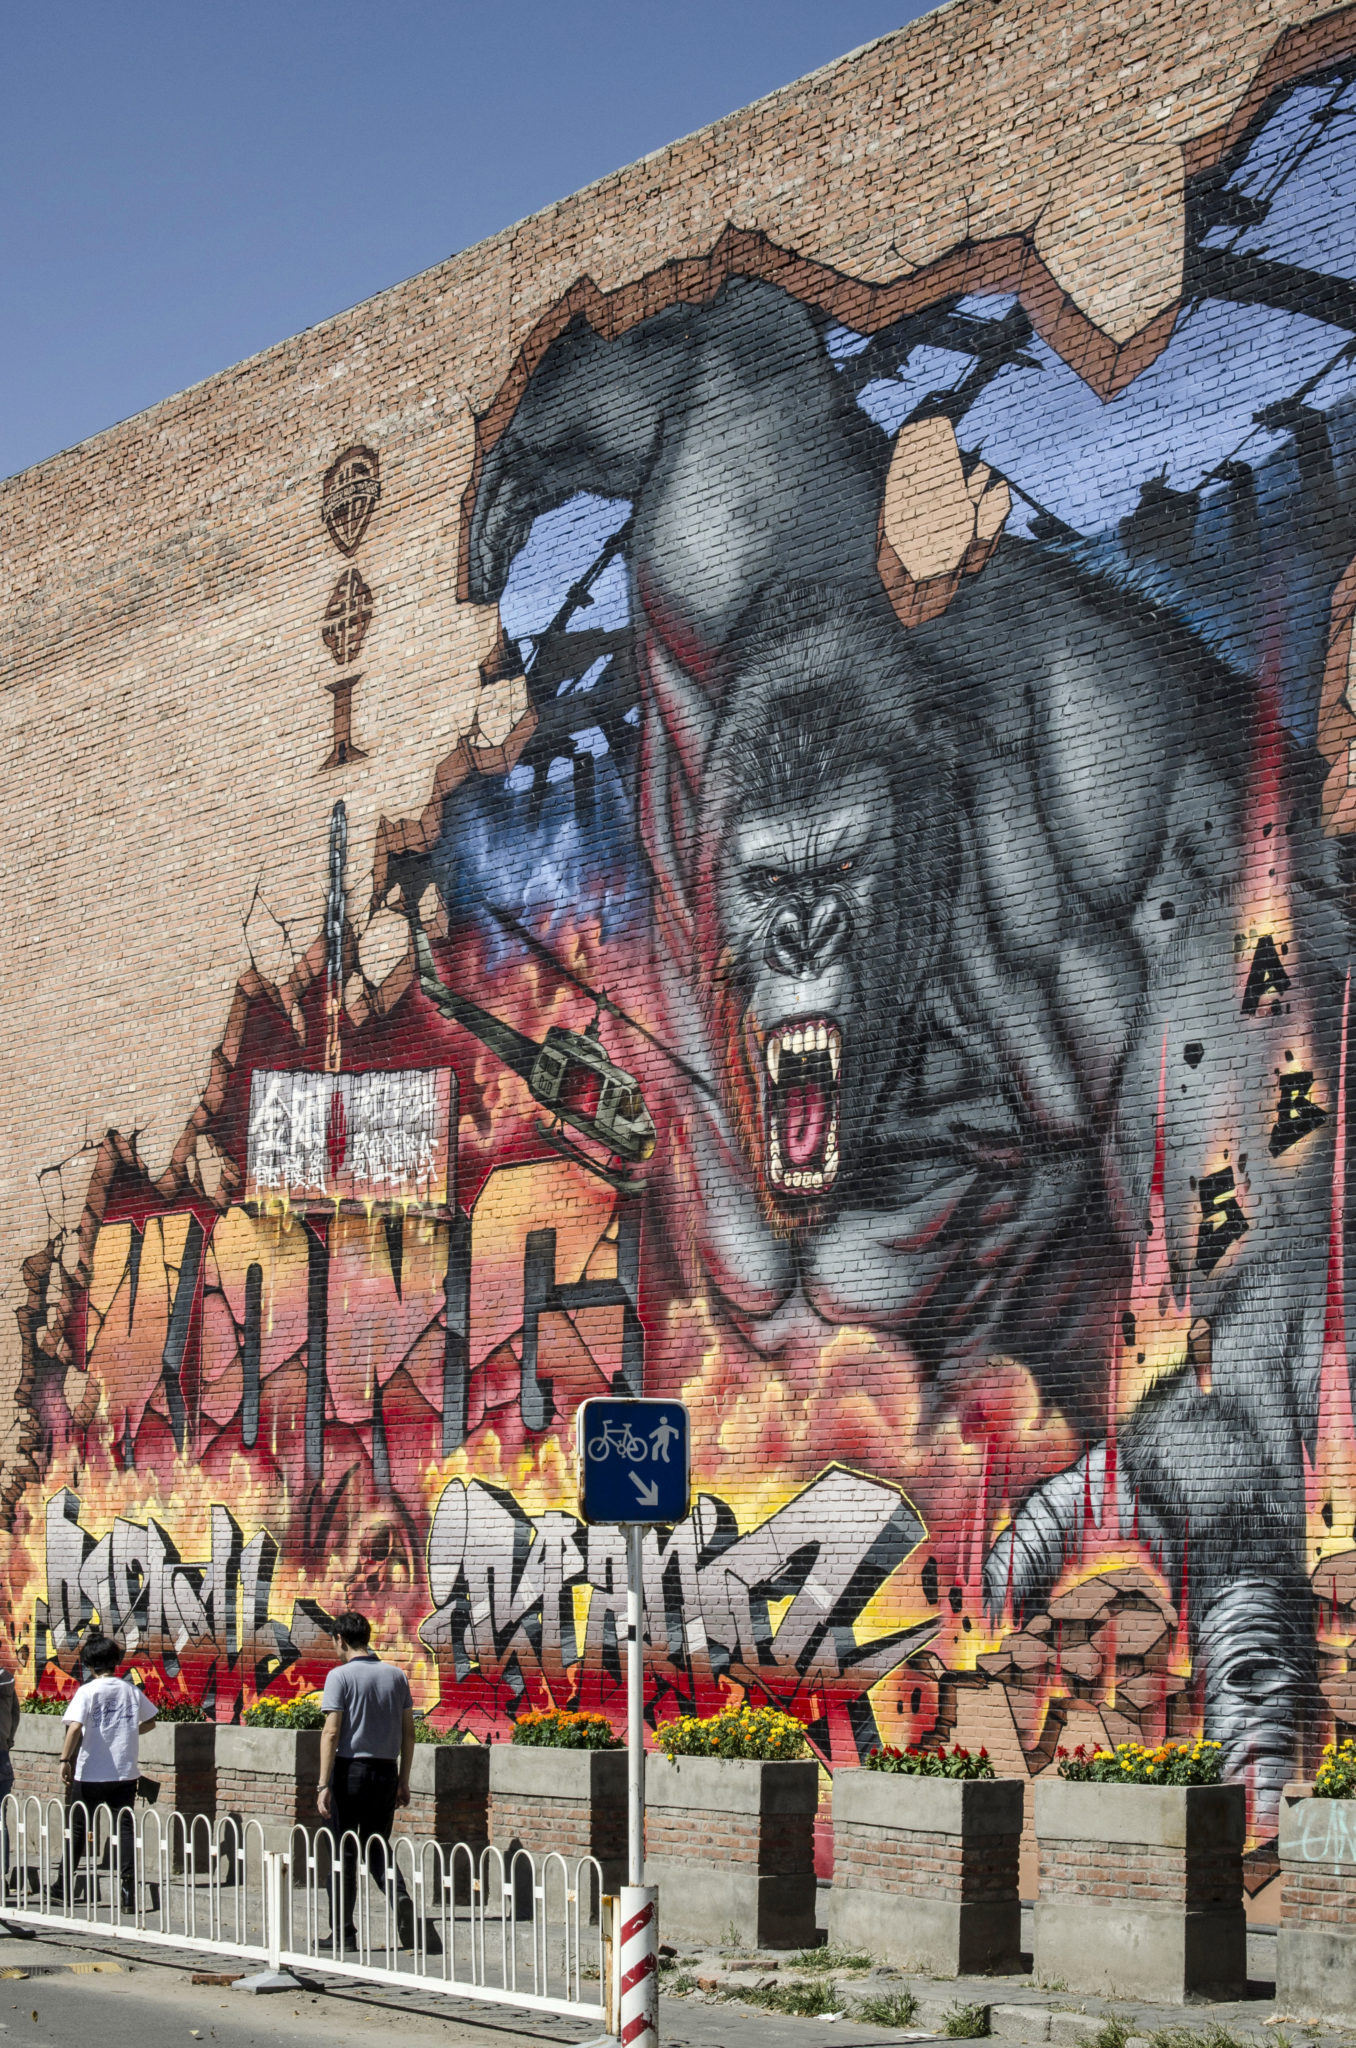 Das Gorilla Mural im 798 Art District in Beijing